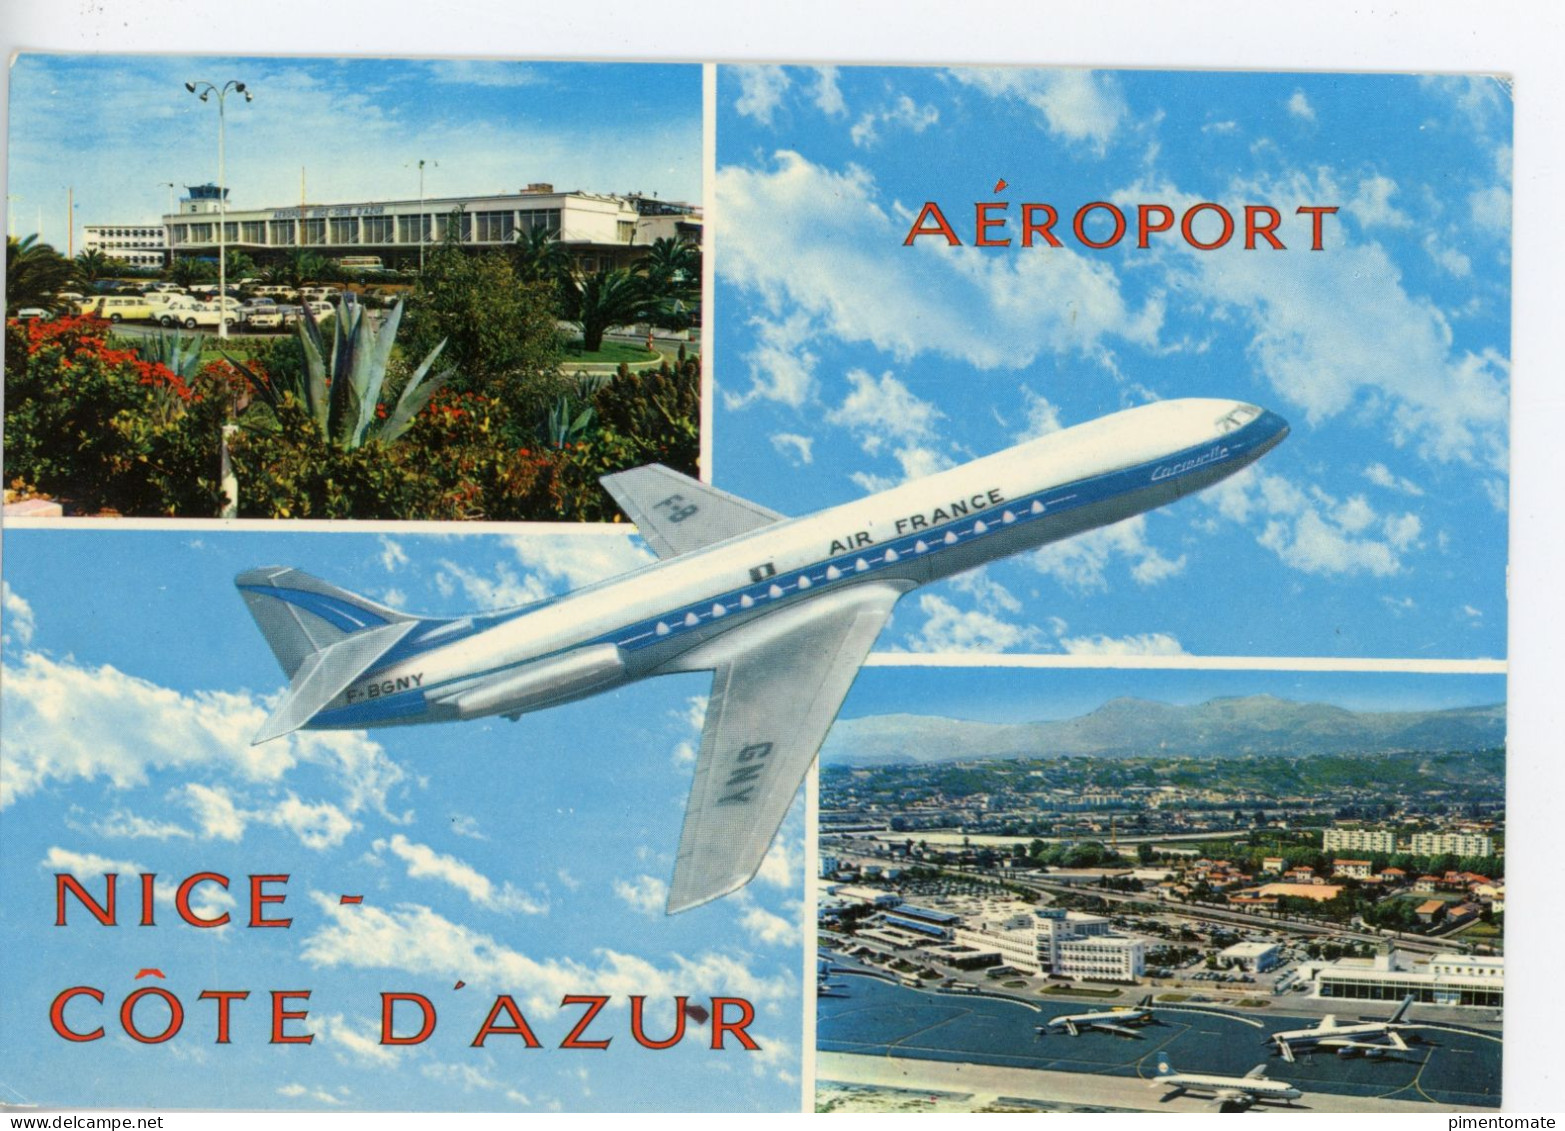 NICE AEROPORT NICE COTE D'AZUR CARAVELLE AIR FRANCE - Luftfahrt - Flughafen